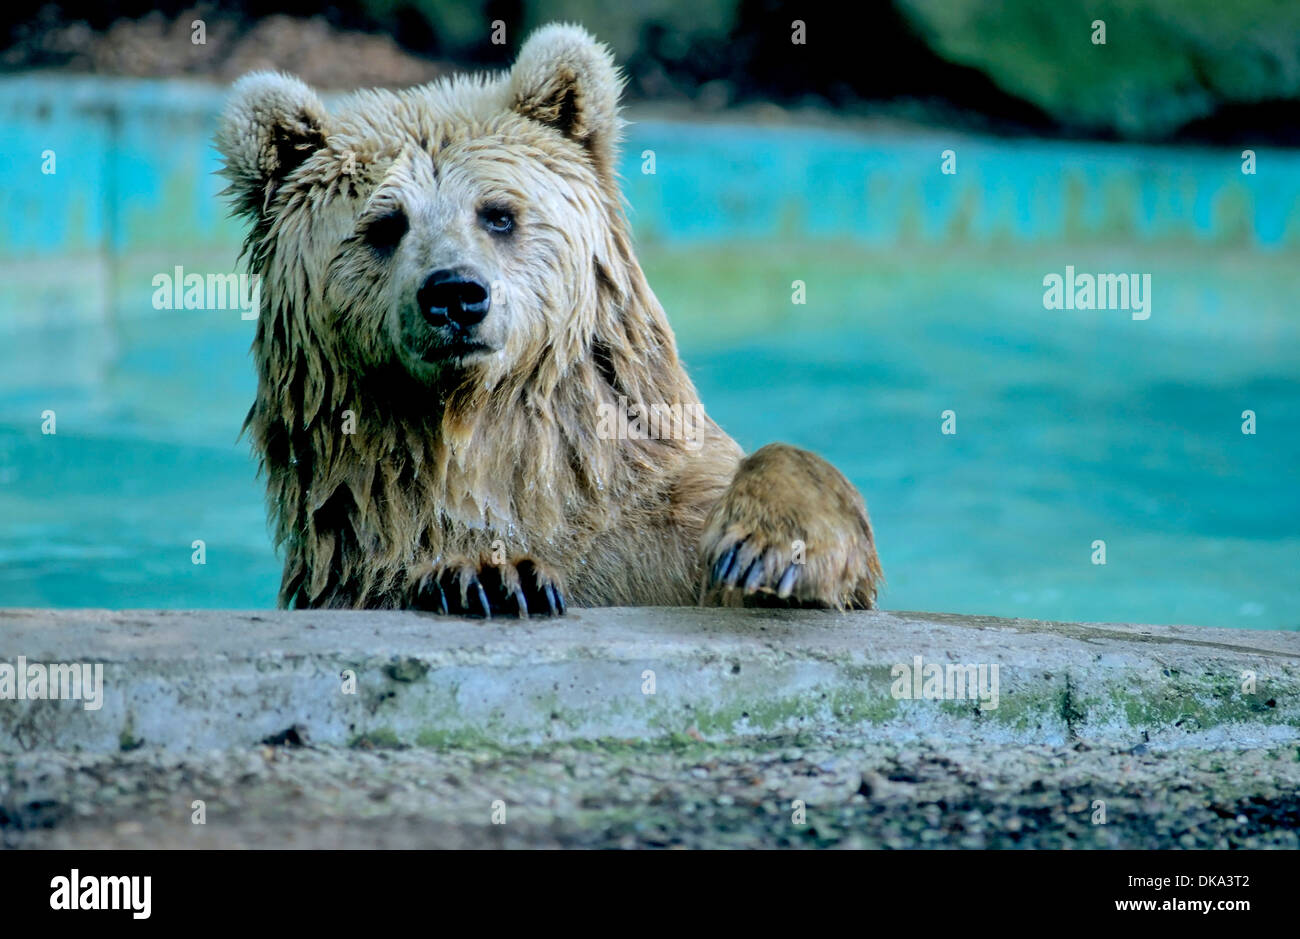 Zoo: Braunbär im Pool, brown bear (Ursus arctos) at pool Stock Photo